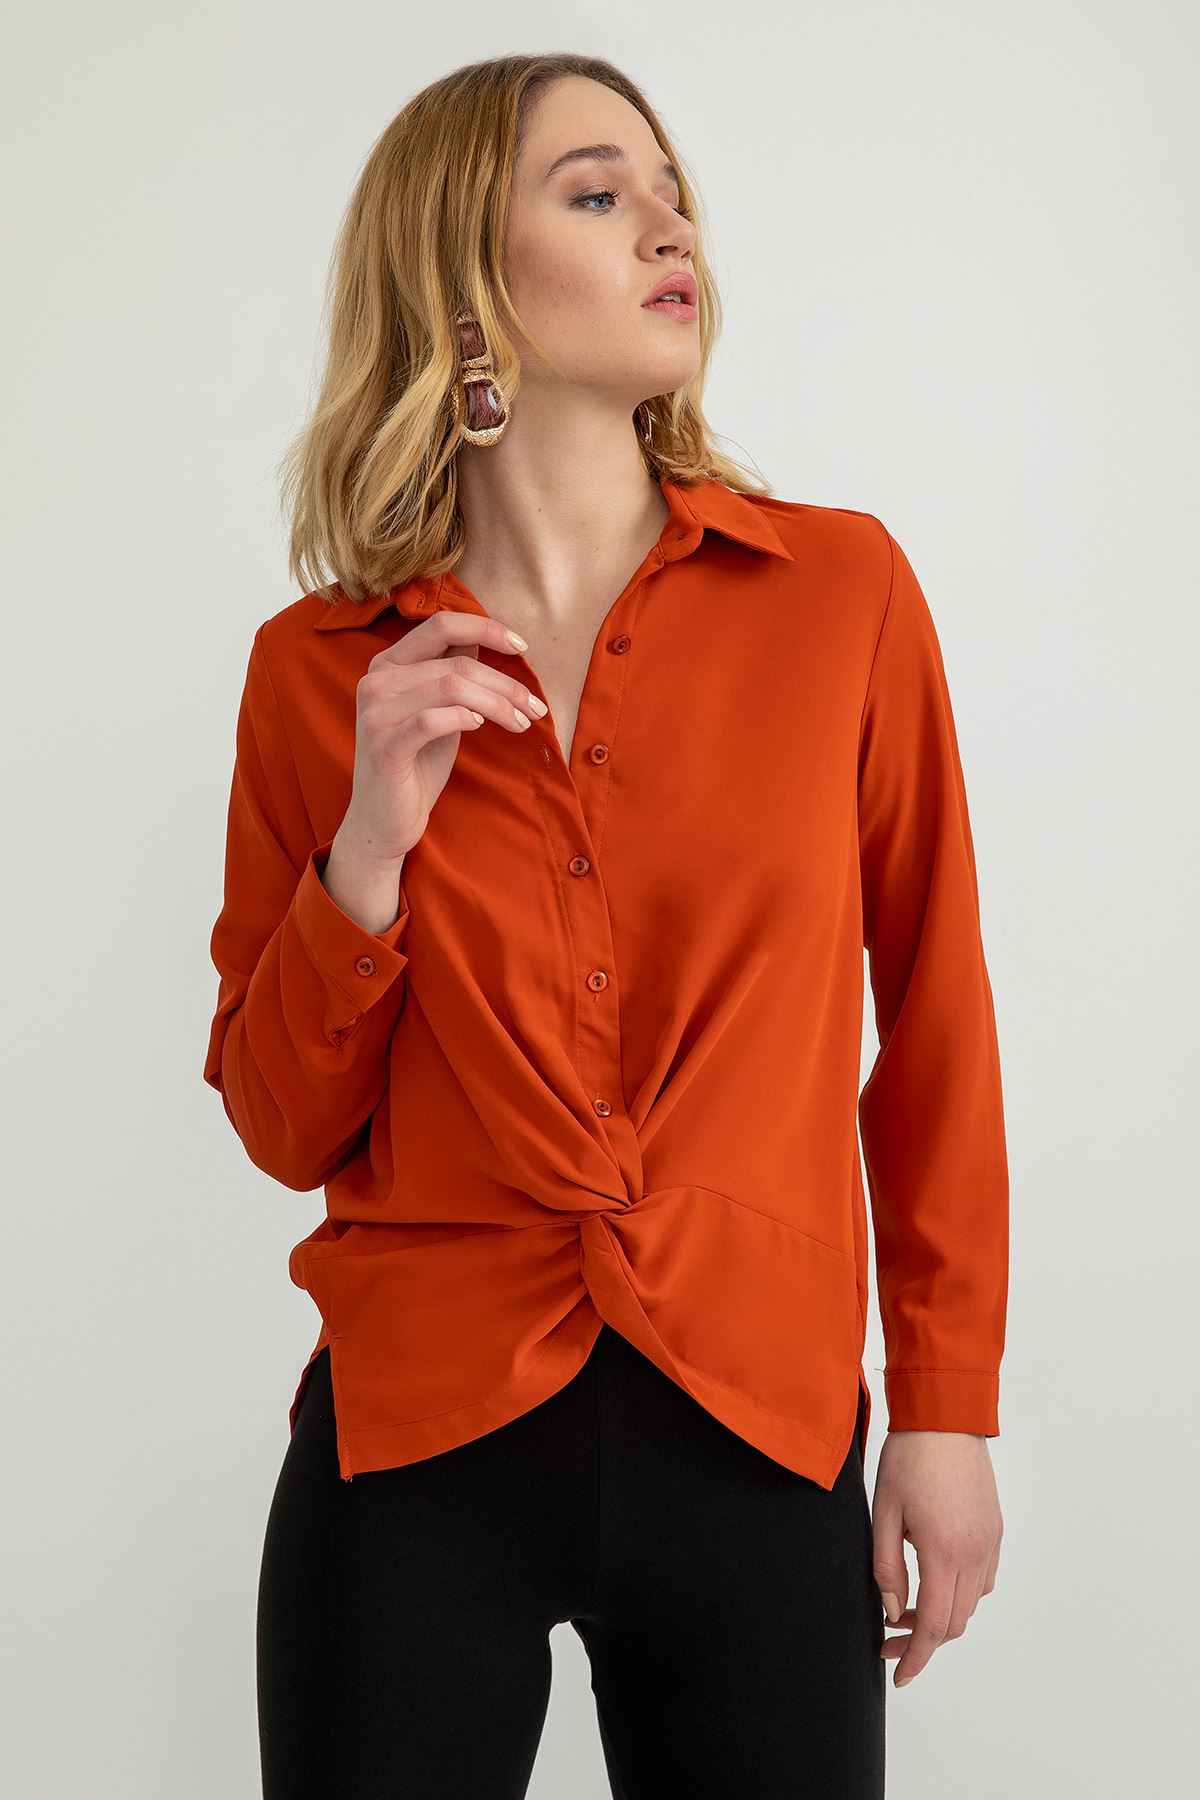 Jesica Fabric Long Sleeve Classical Button Front Women'S Shirt - Brick 